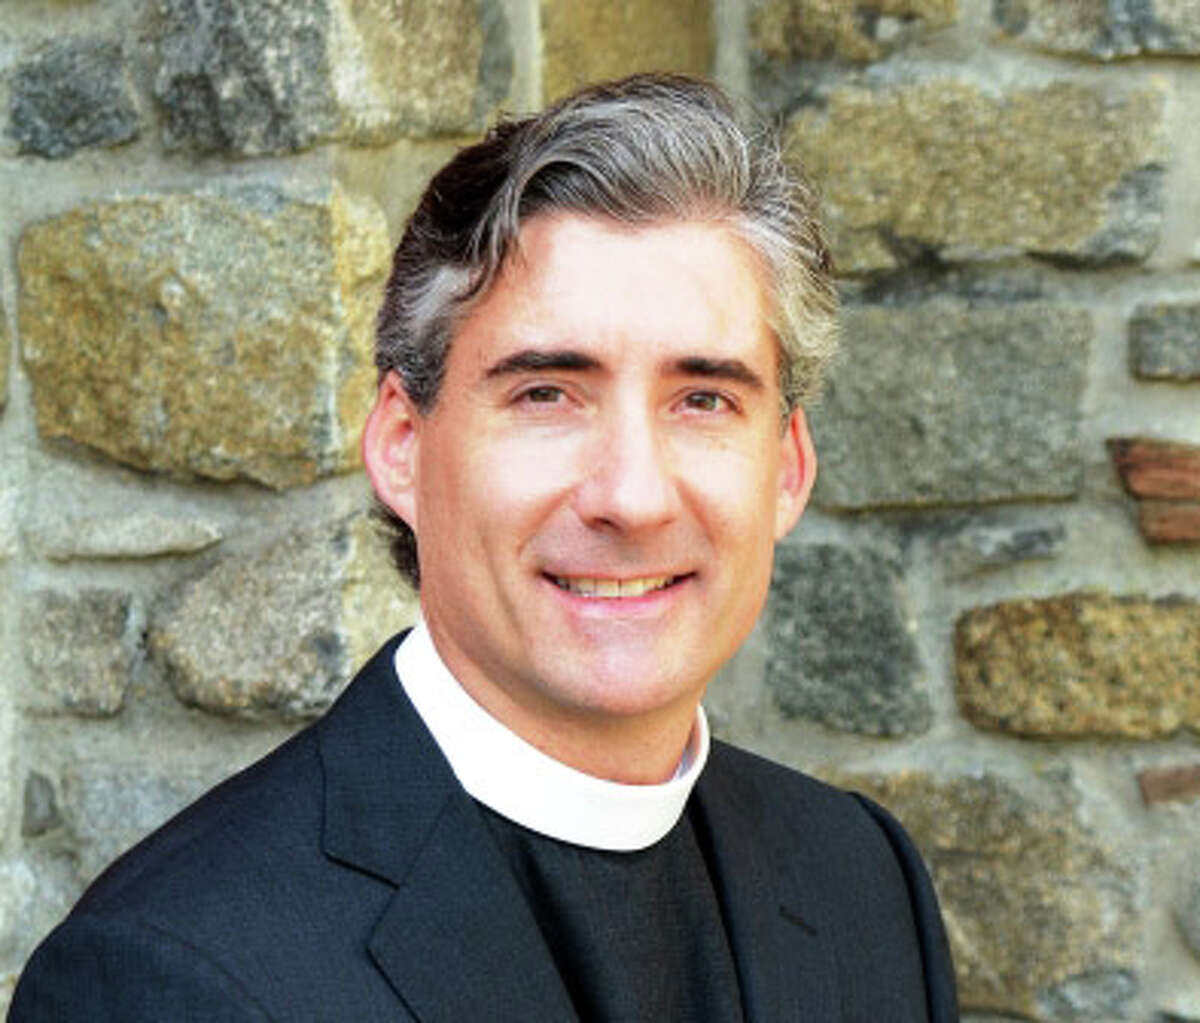 Rev. Joseph Shepley is the rector of St. Paul's Episcopal Church in Brookfield, Conn.